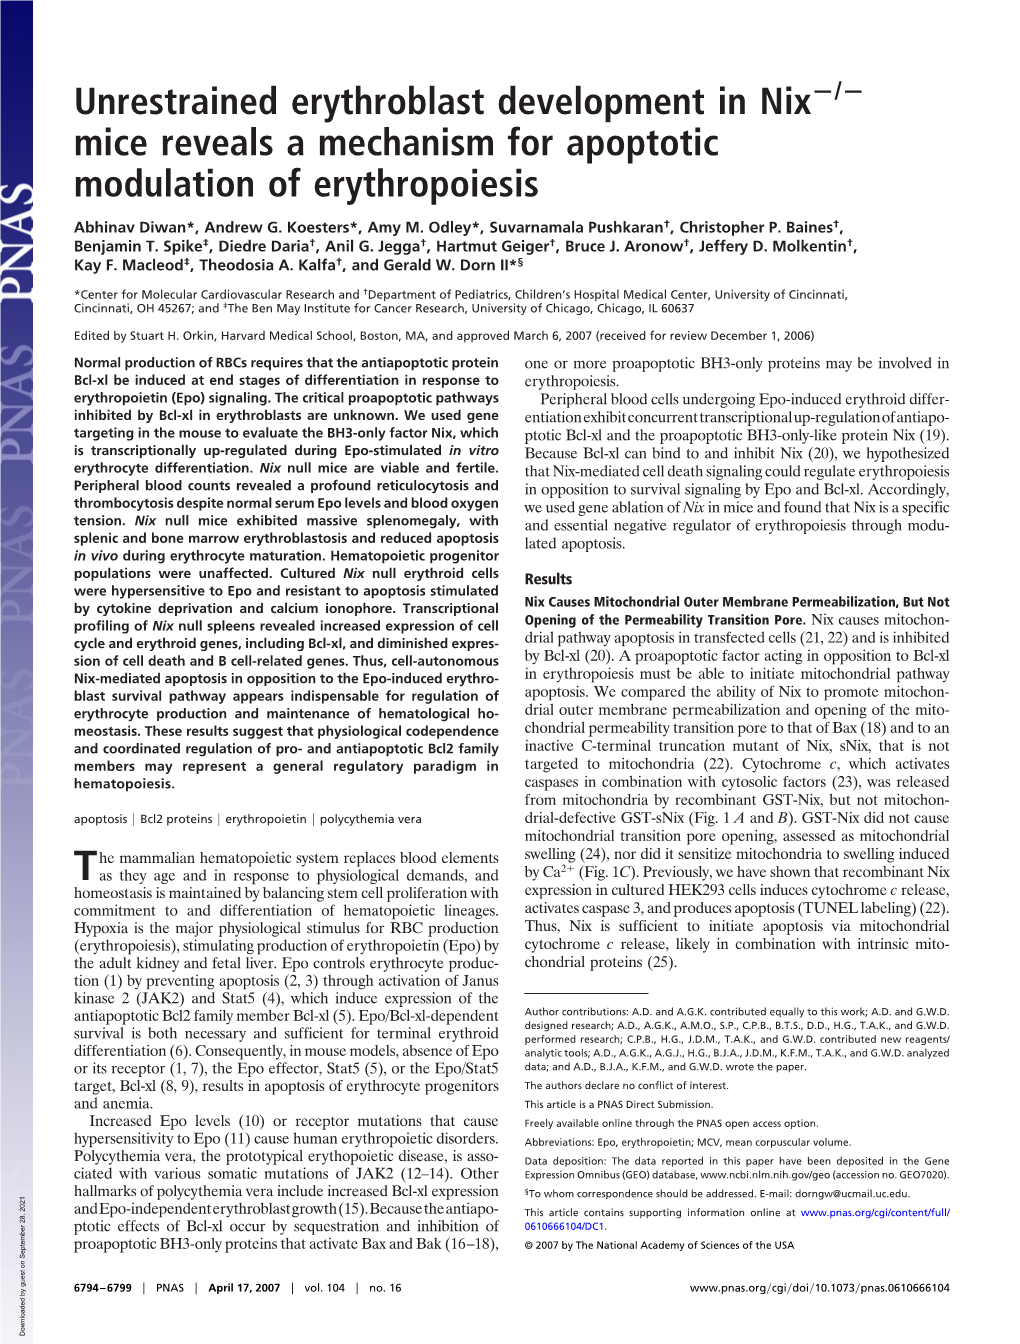 Unrestrained Erythroblast Development in Nix Mice Reveals A